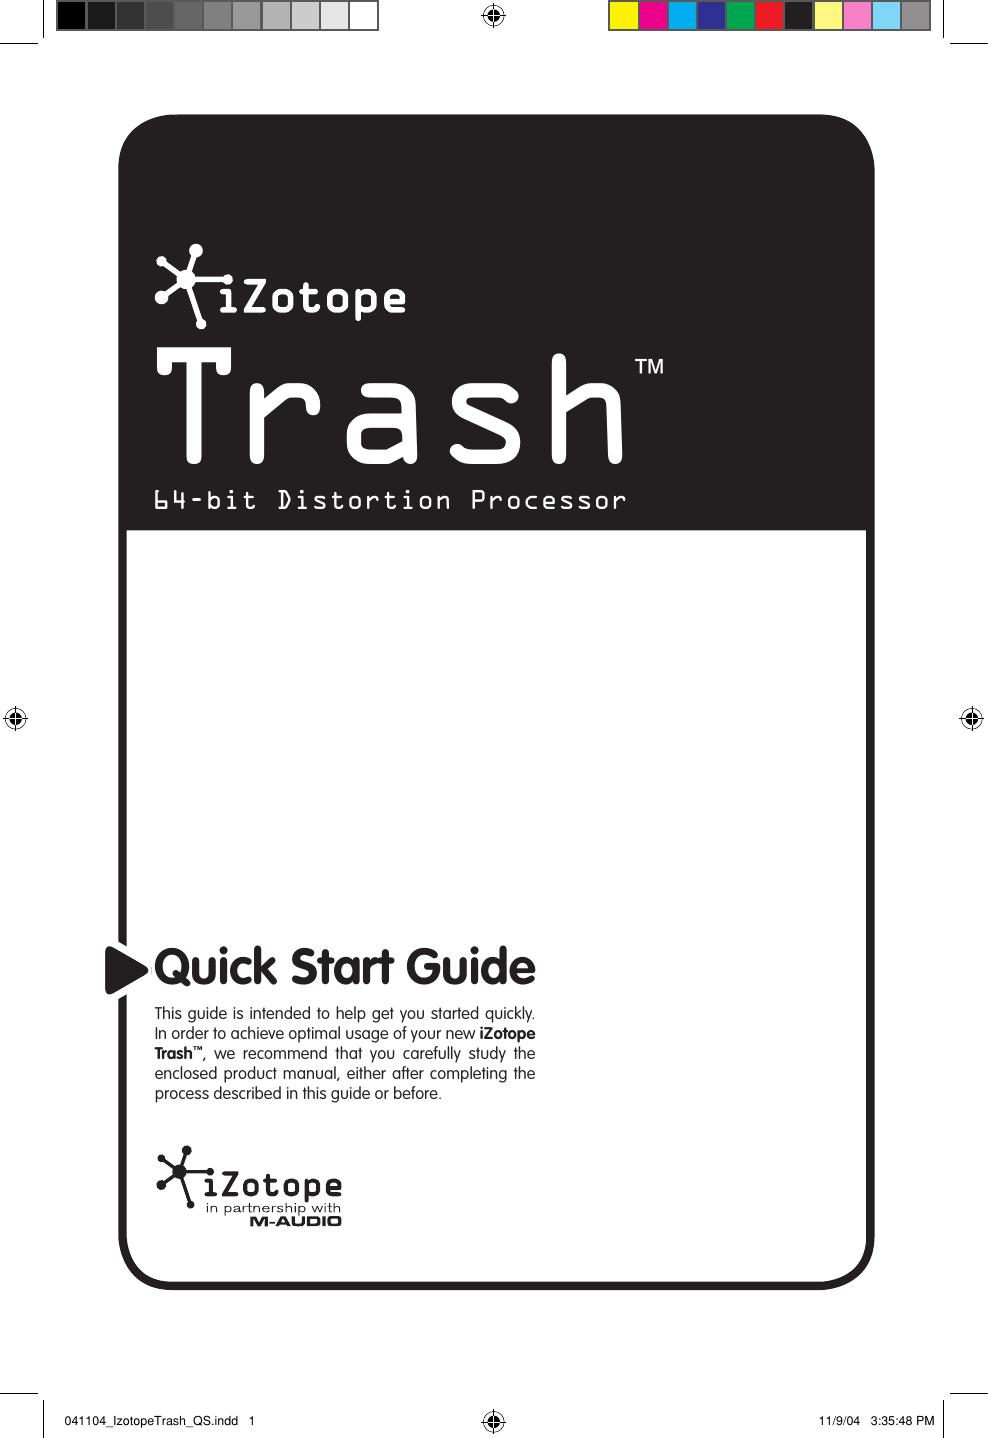 izotope trash 2 presets folder